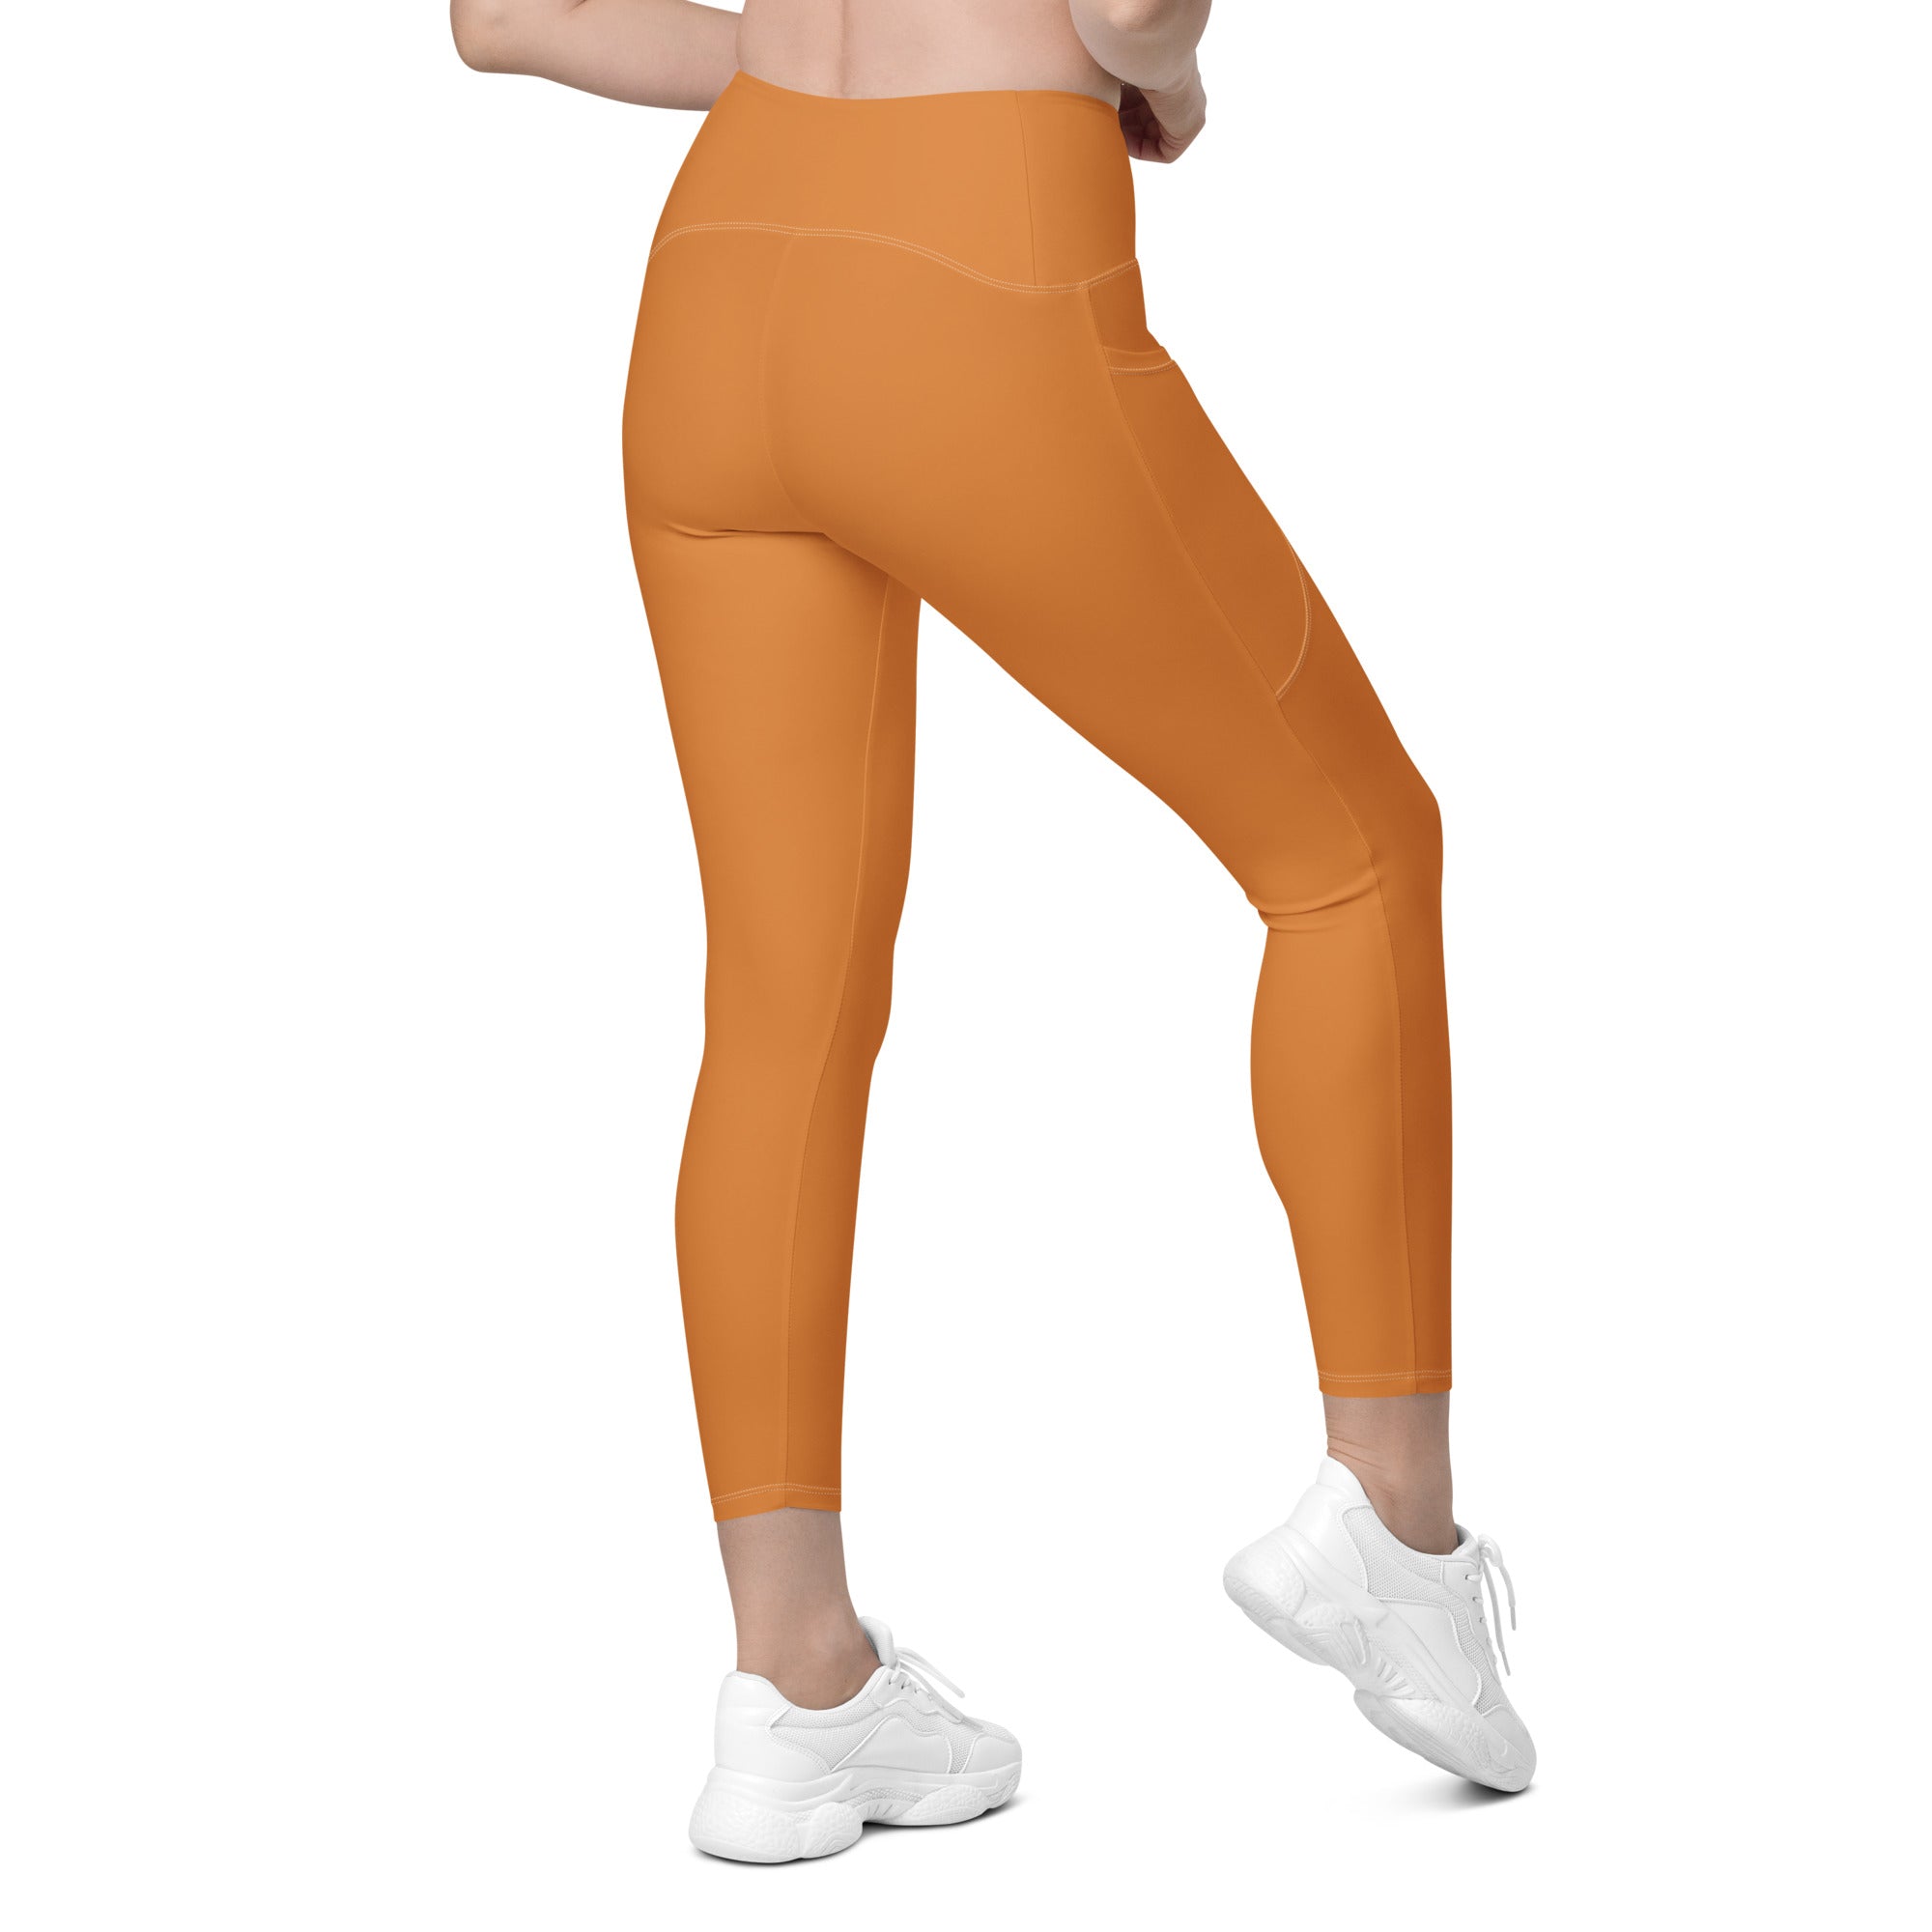 Tangerine Orange Leggings With Pockets